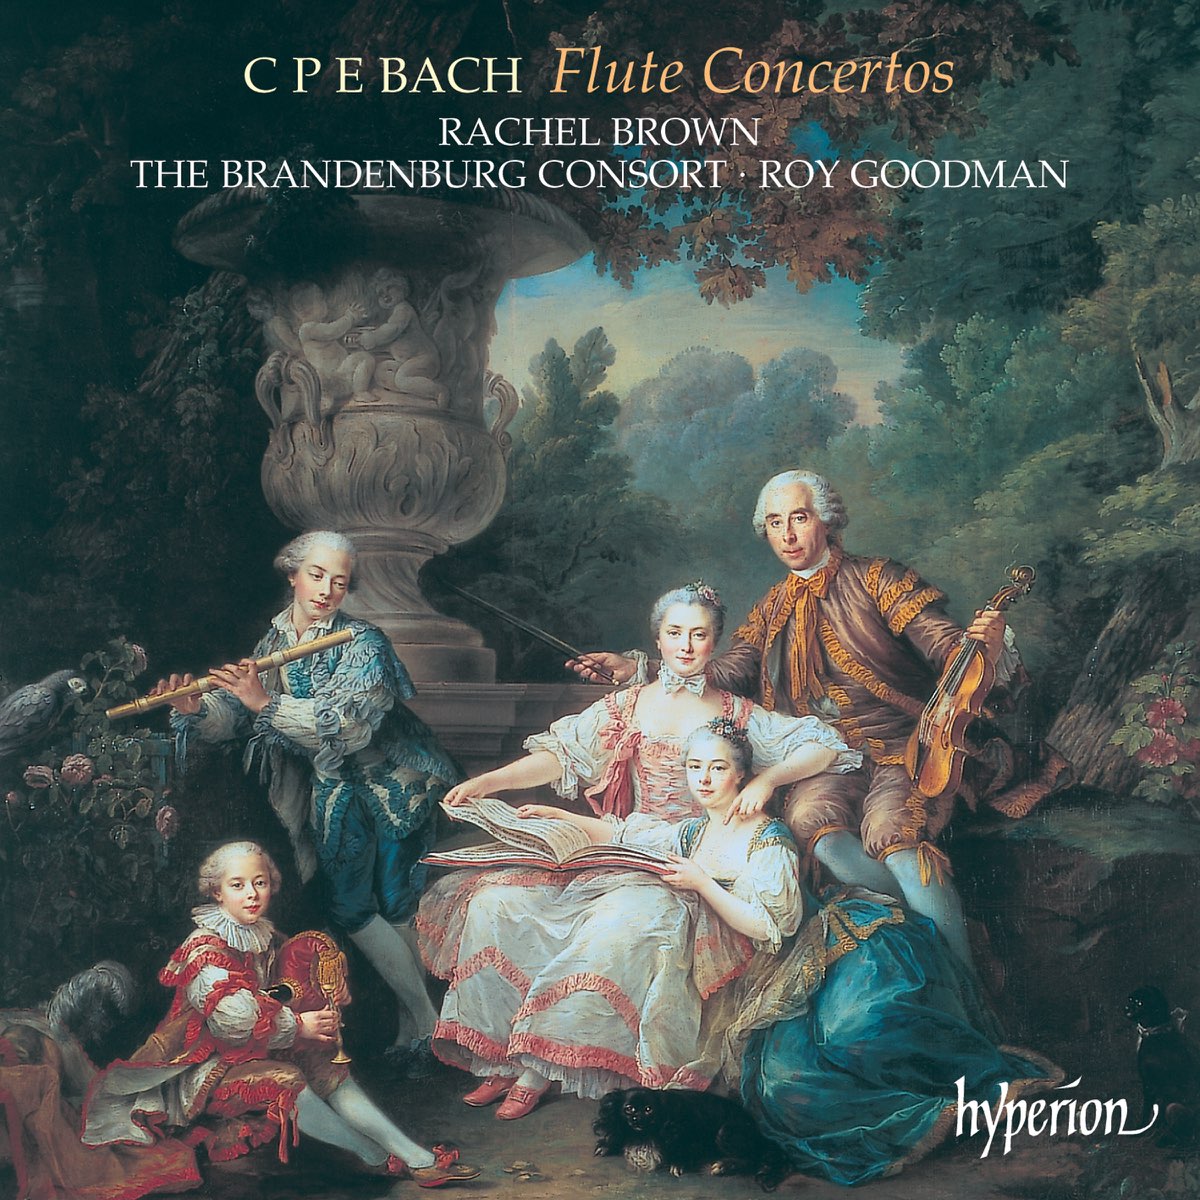 Бах: Flute Sonatas. Kleinknecht. Friedrich the great Flute Concertos. C. P. E. Bach - Trio Sonatas · Flute Concertos (Alexis Kossenko) (2014) купить. Flute concertos